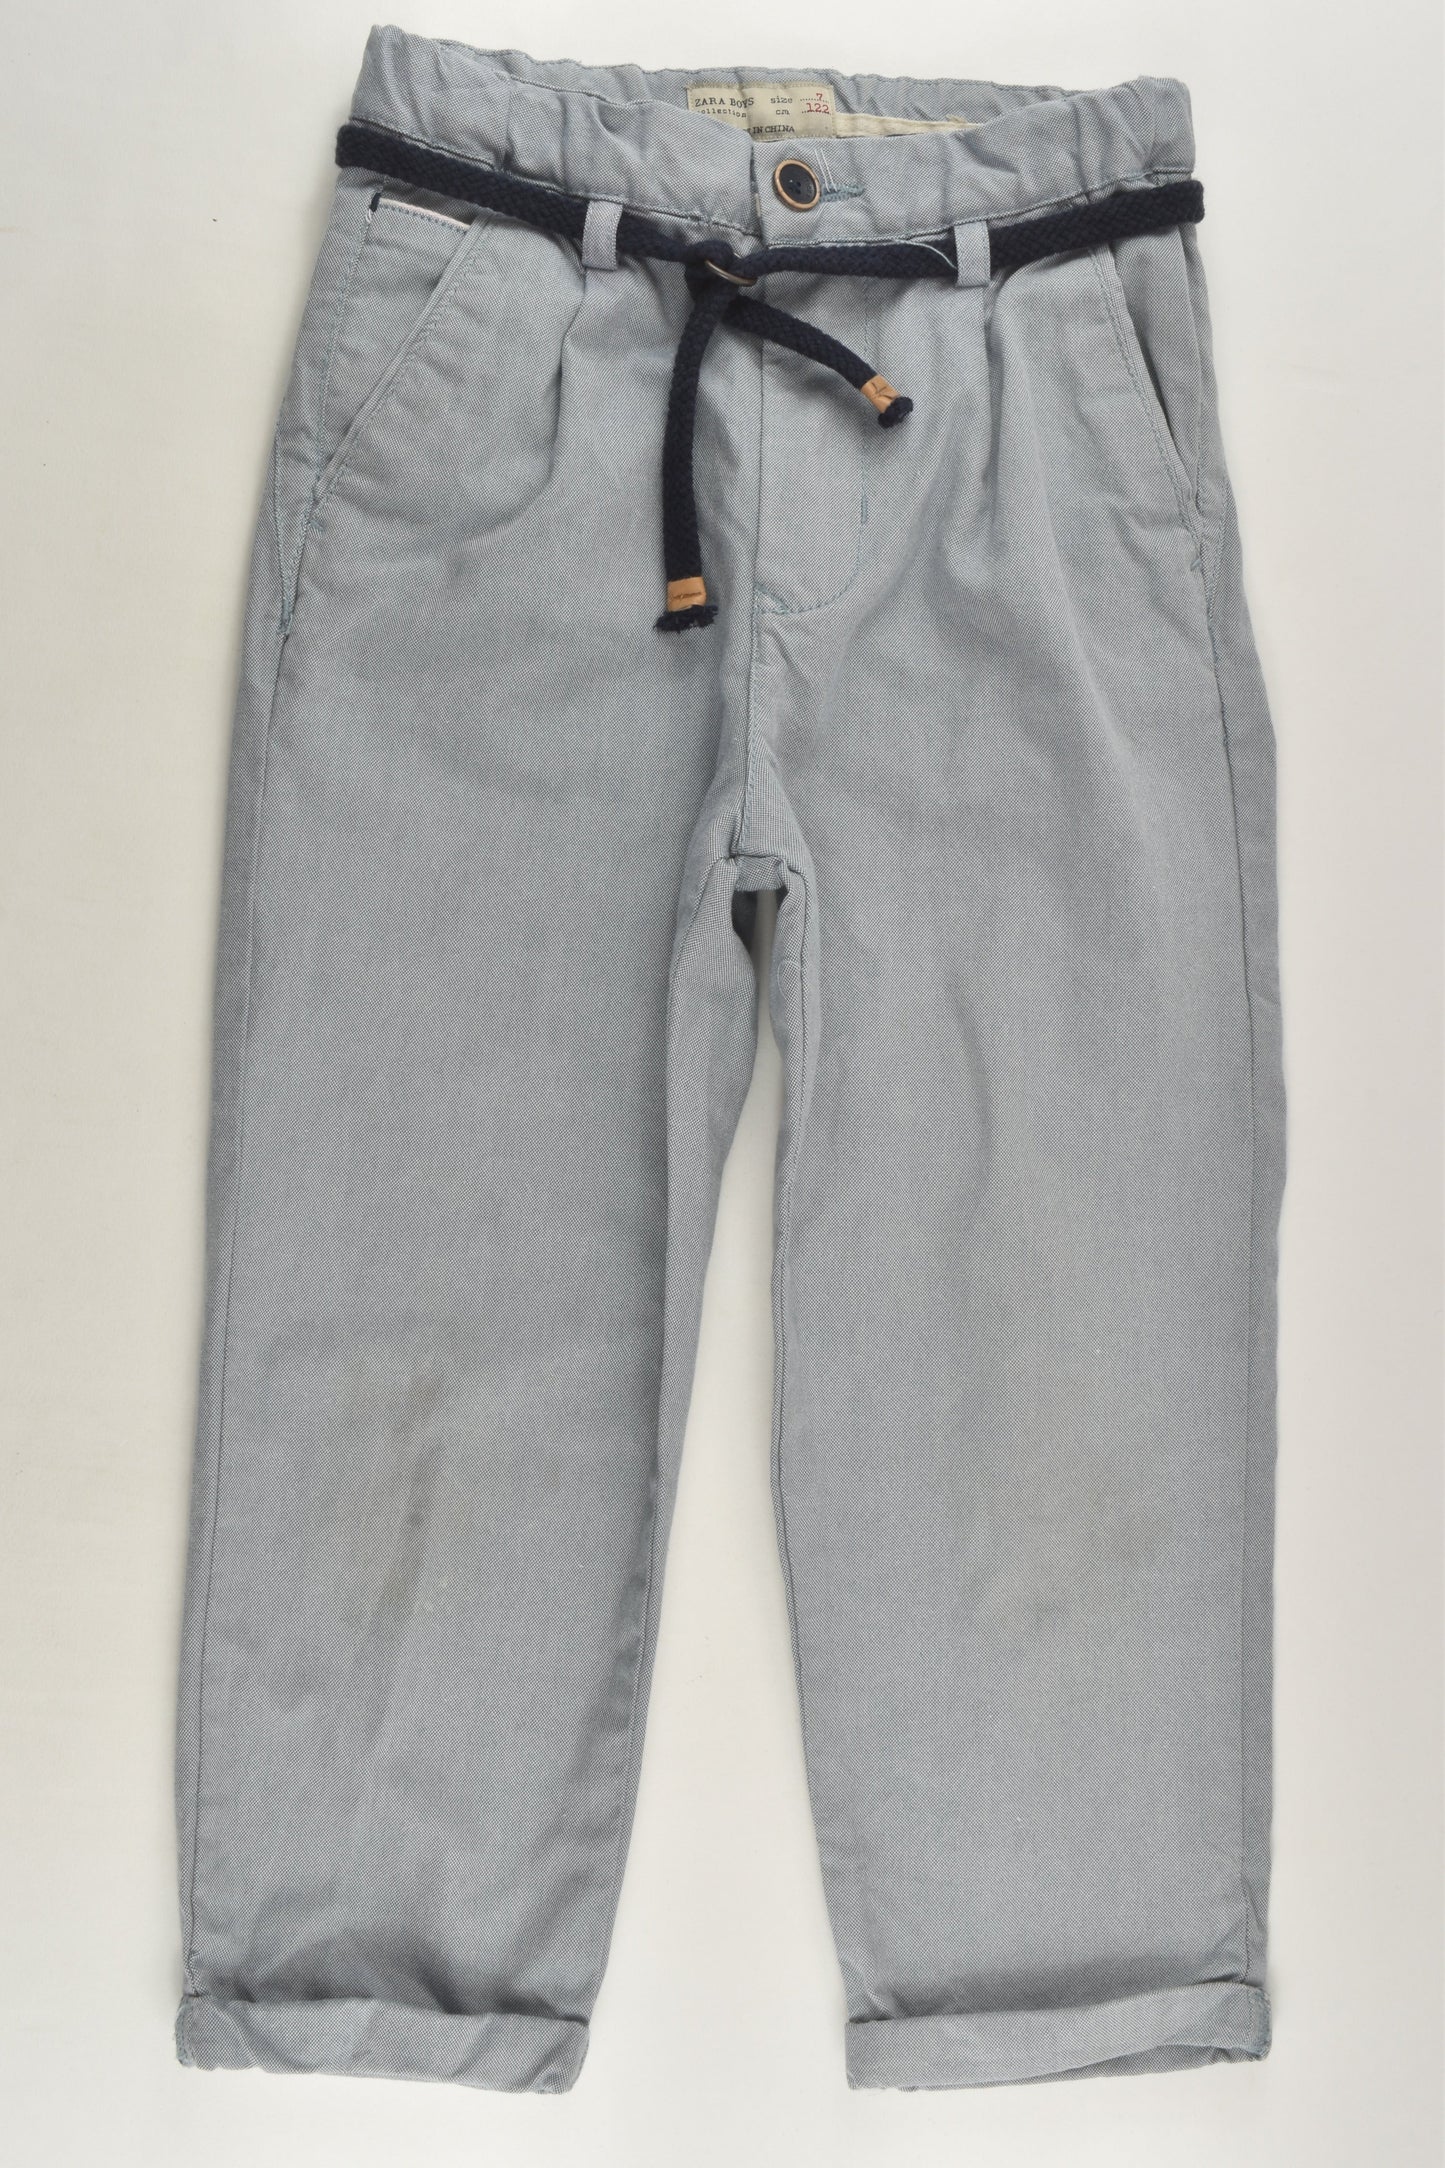 Zara Size 7 Pants with Belt